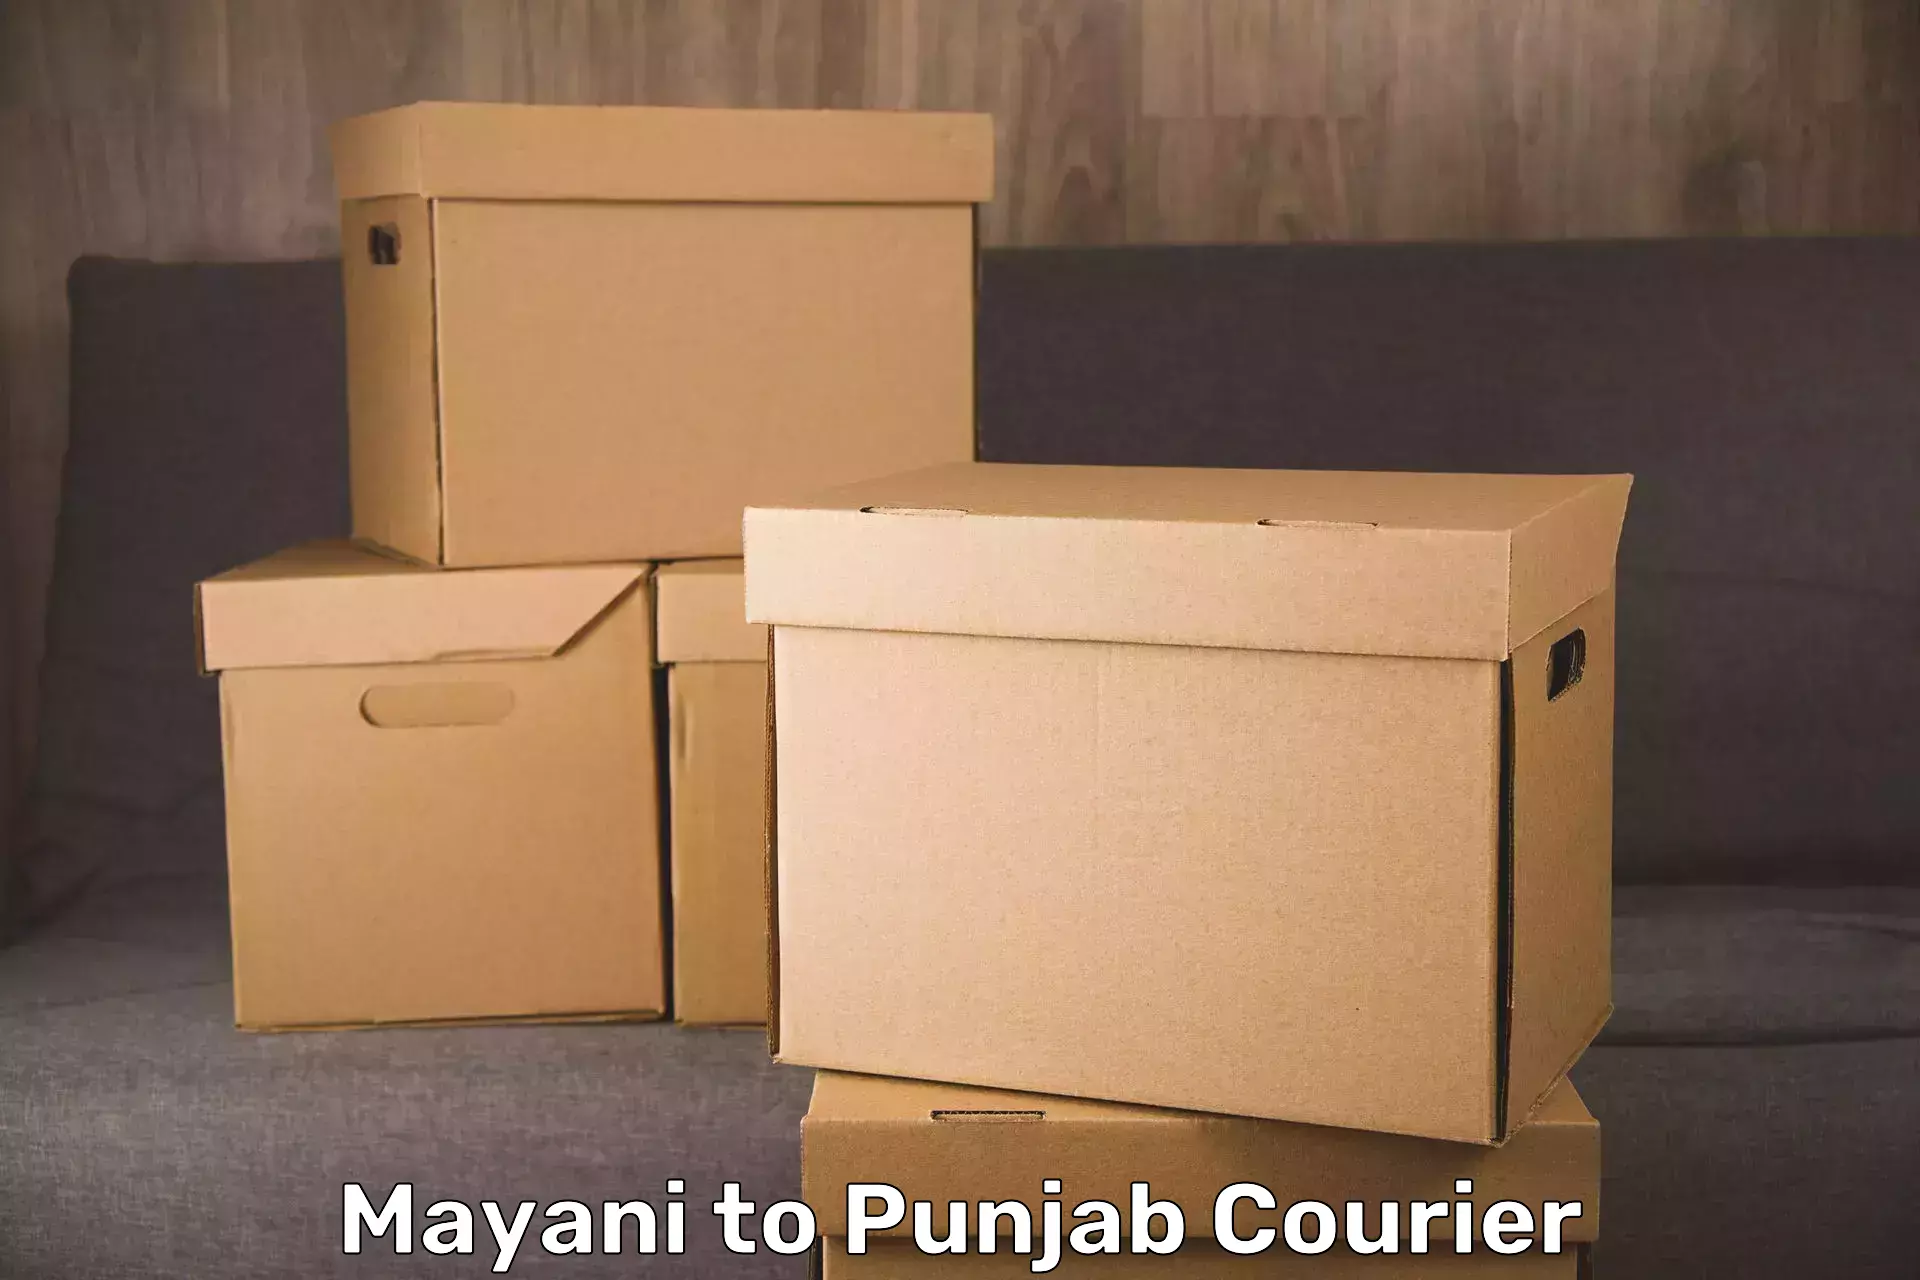 Luggage shipment specialists Mayani to Punjab